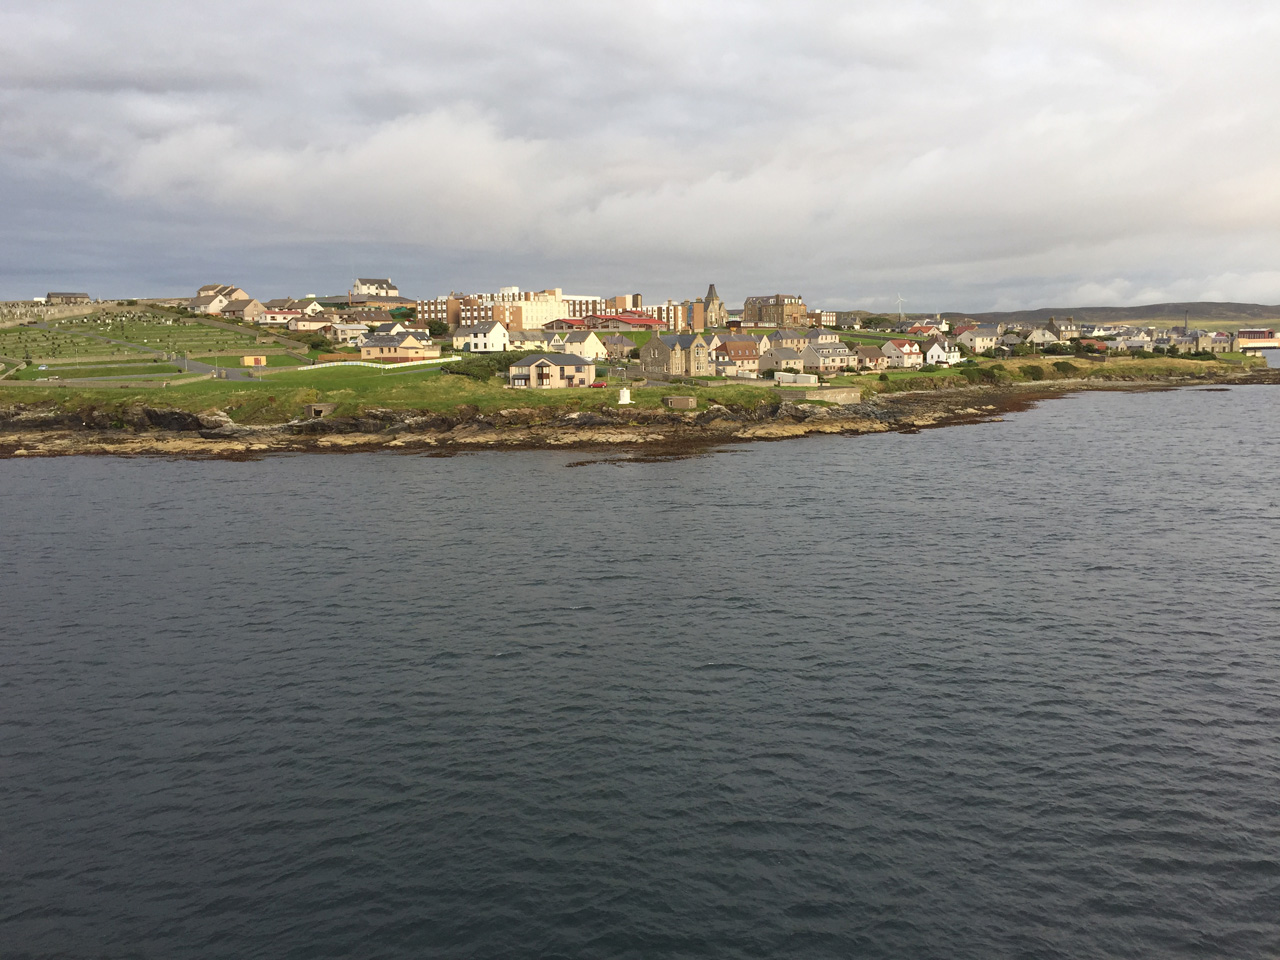 Approaching Lerwick, Shetland.